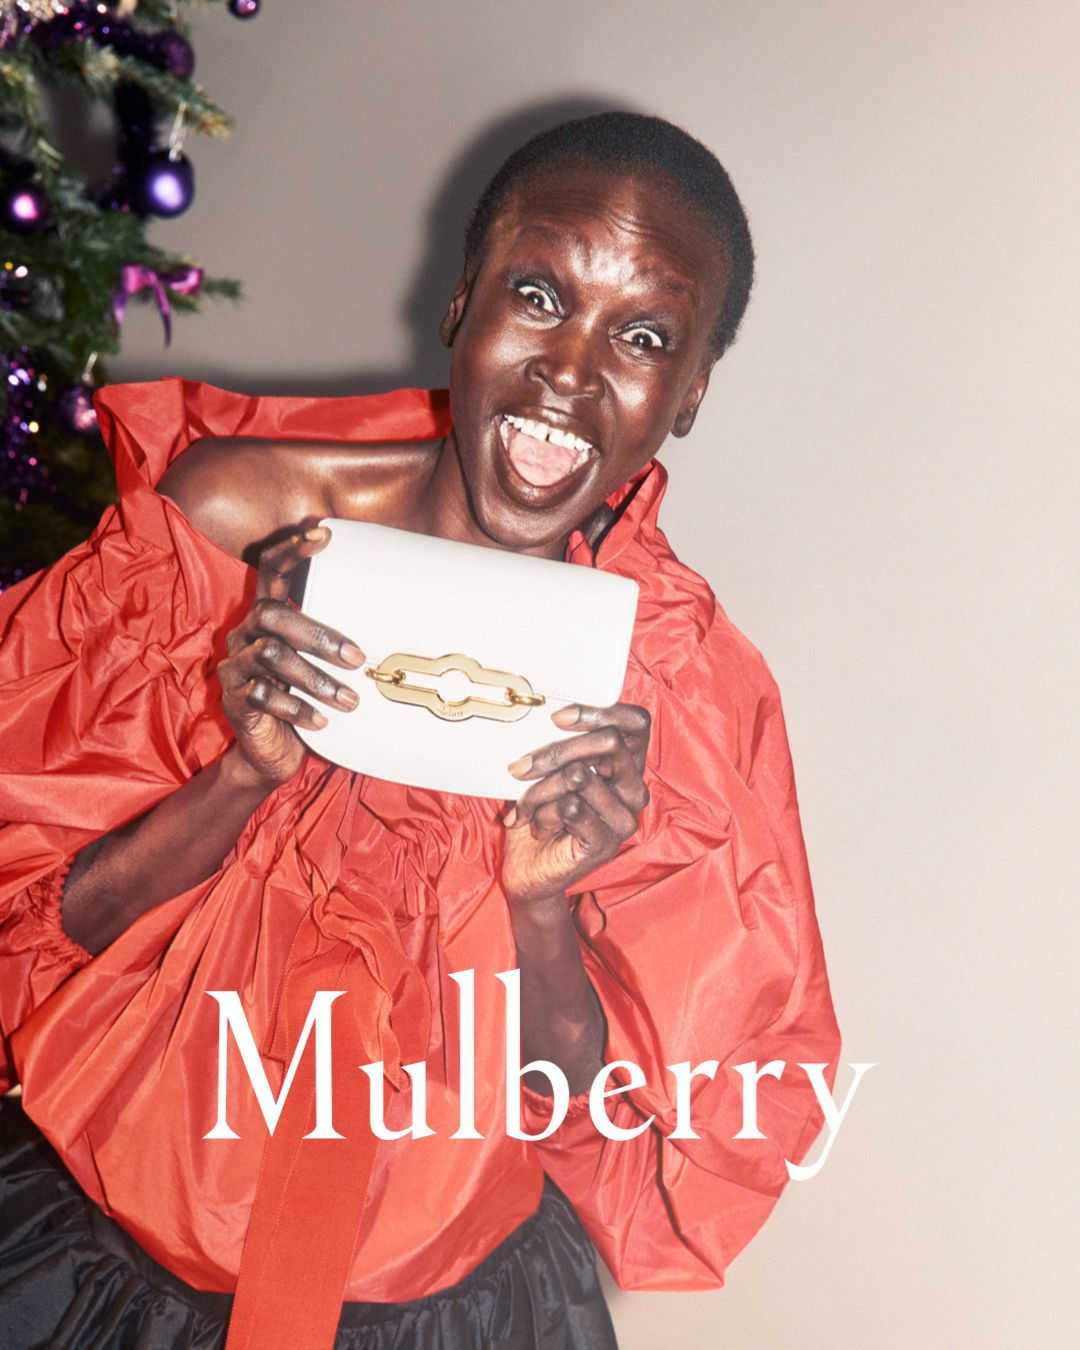 Mulberry - Anton Gotlob - 5891